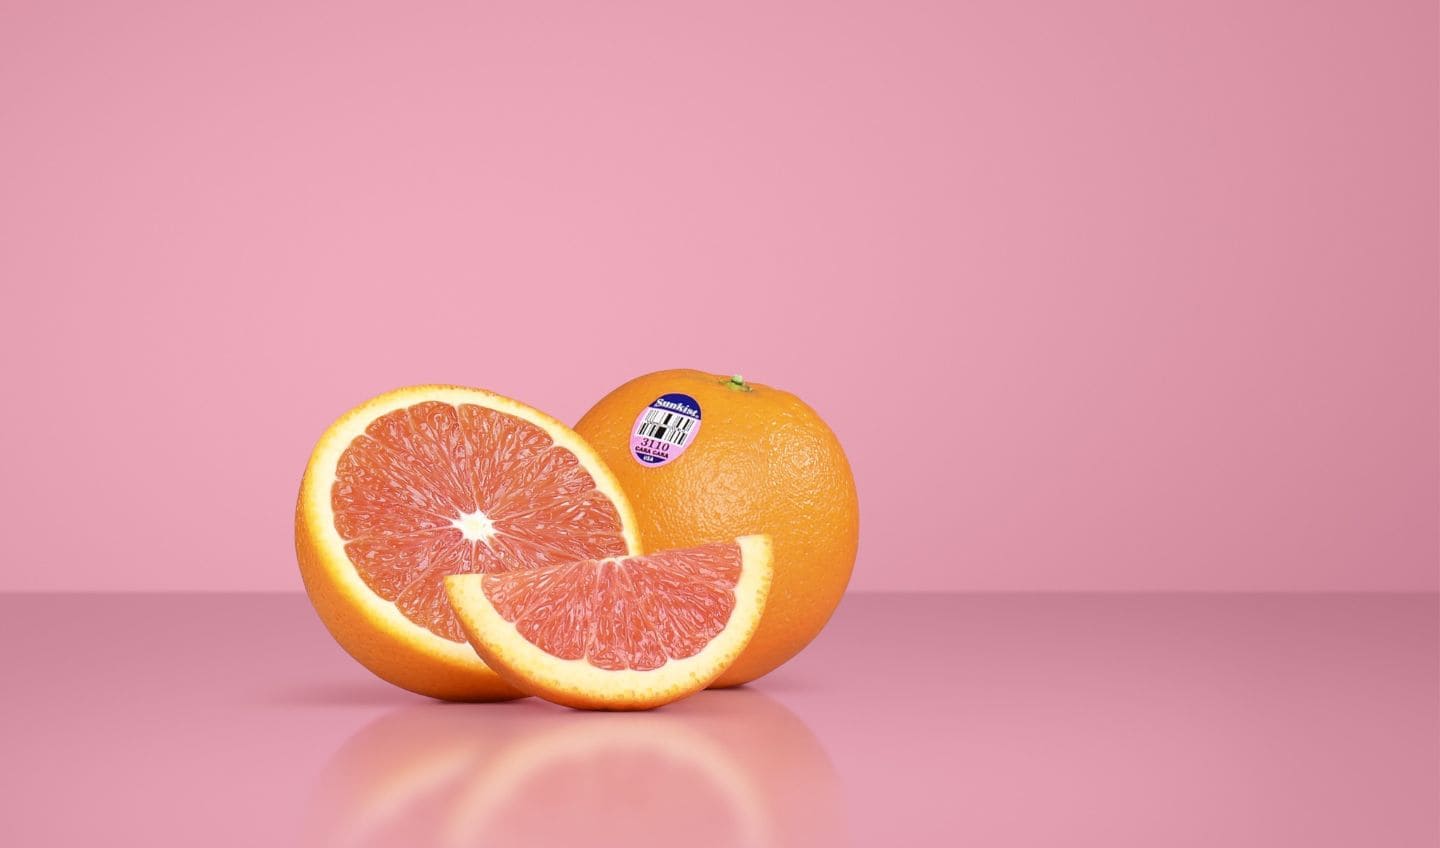 Cara Cara oranges